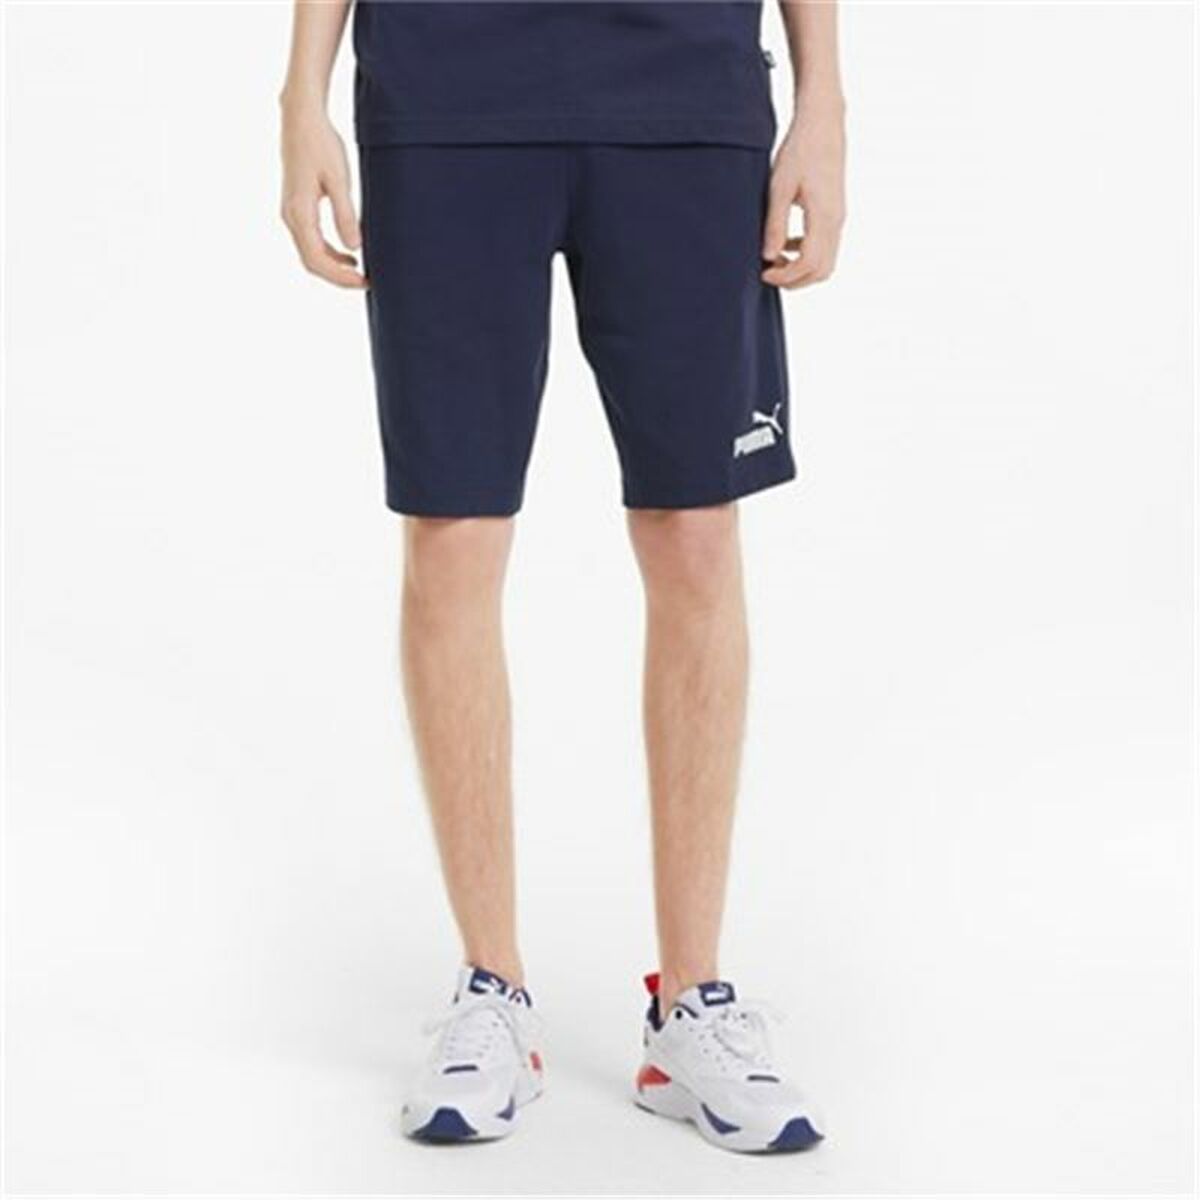 Men's Sports Shorts Puma Essentials  Blue Dark blue